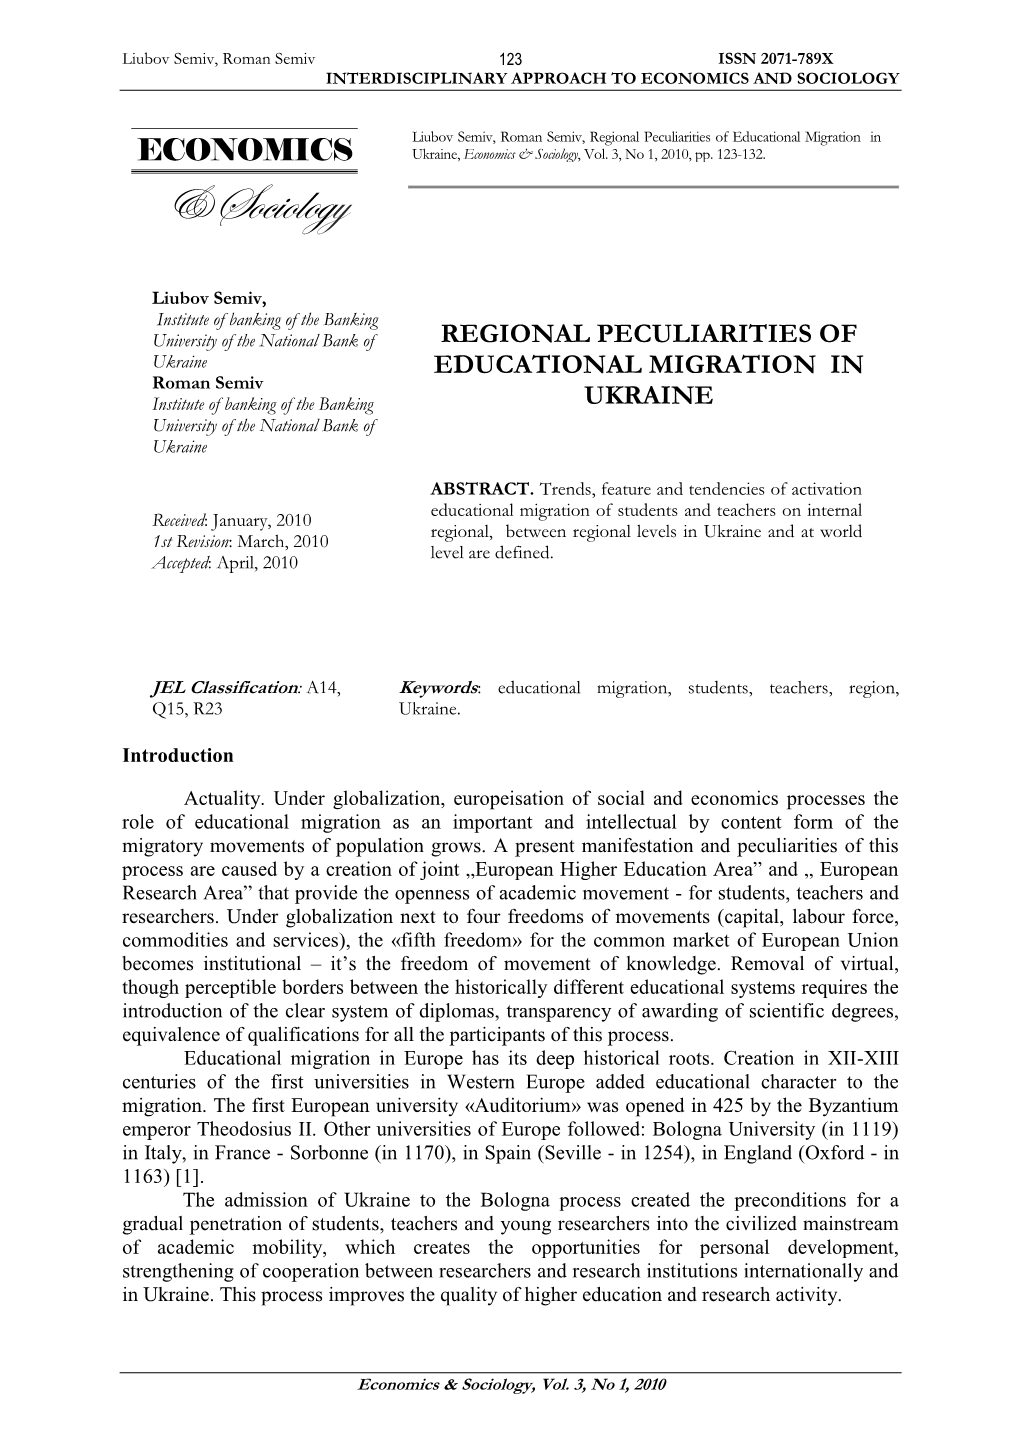 Regional Peculiarities of Educational Migration in Ukraine, Economics & Sociology, Vol